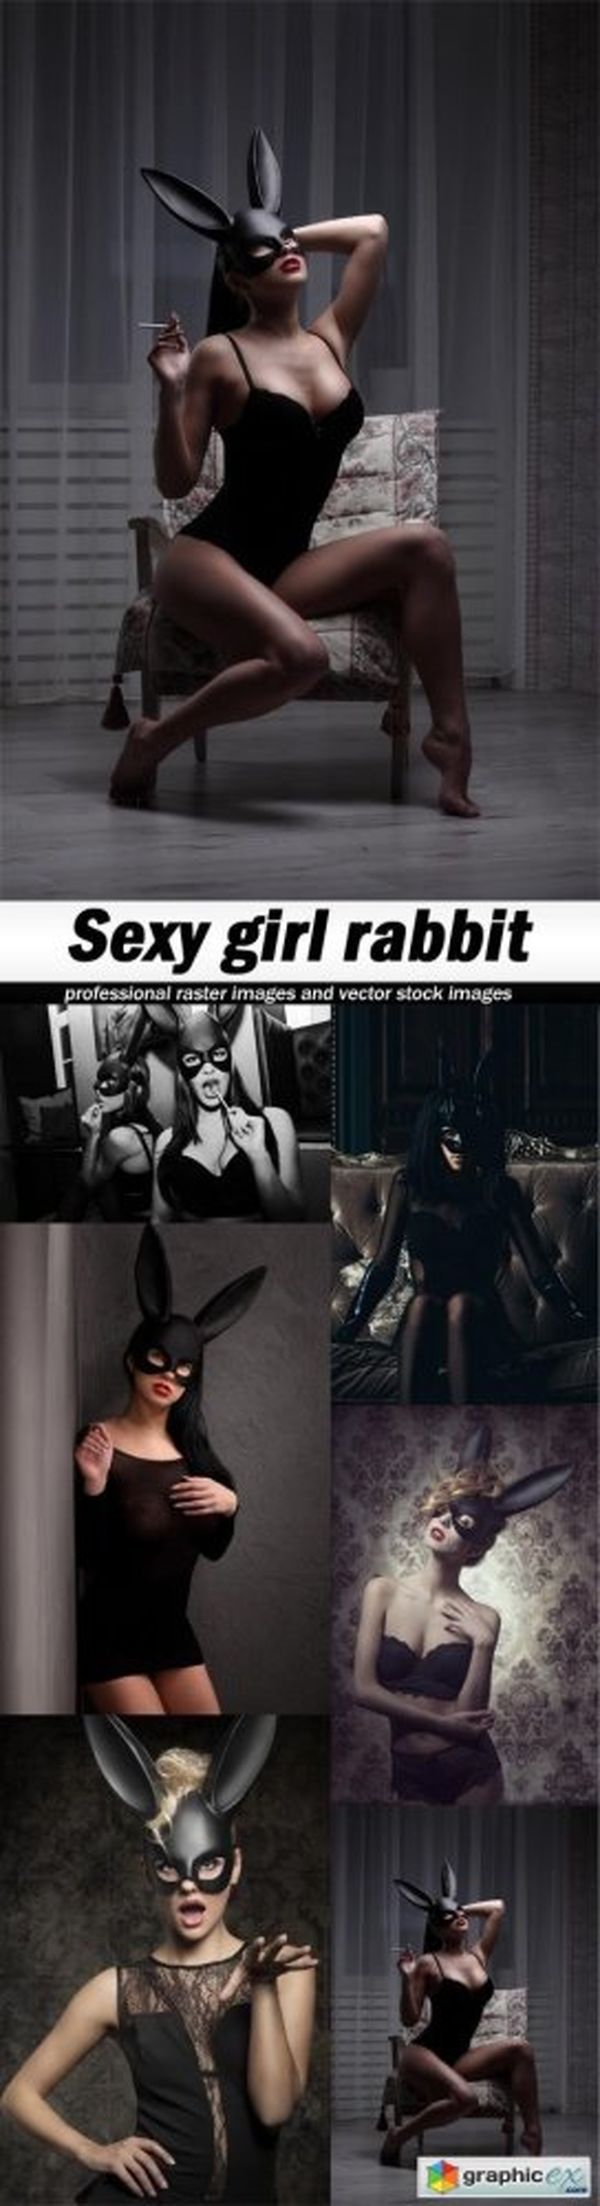 Sexy girl rabbit-6xJPEGs " Free Download Vector Stock Image